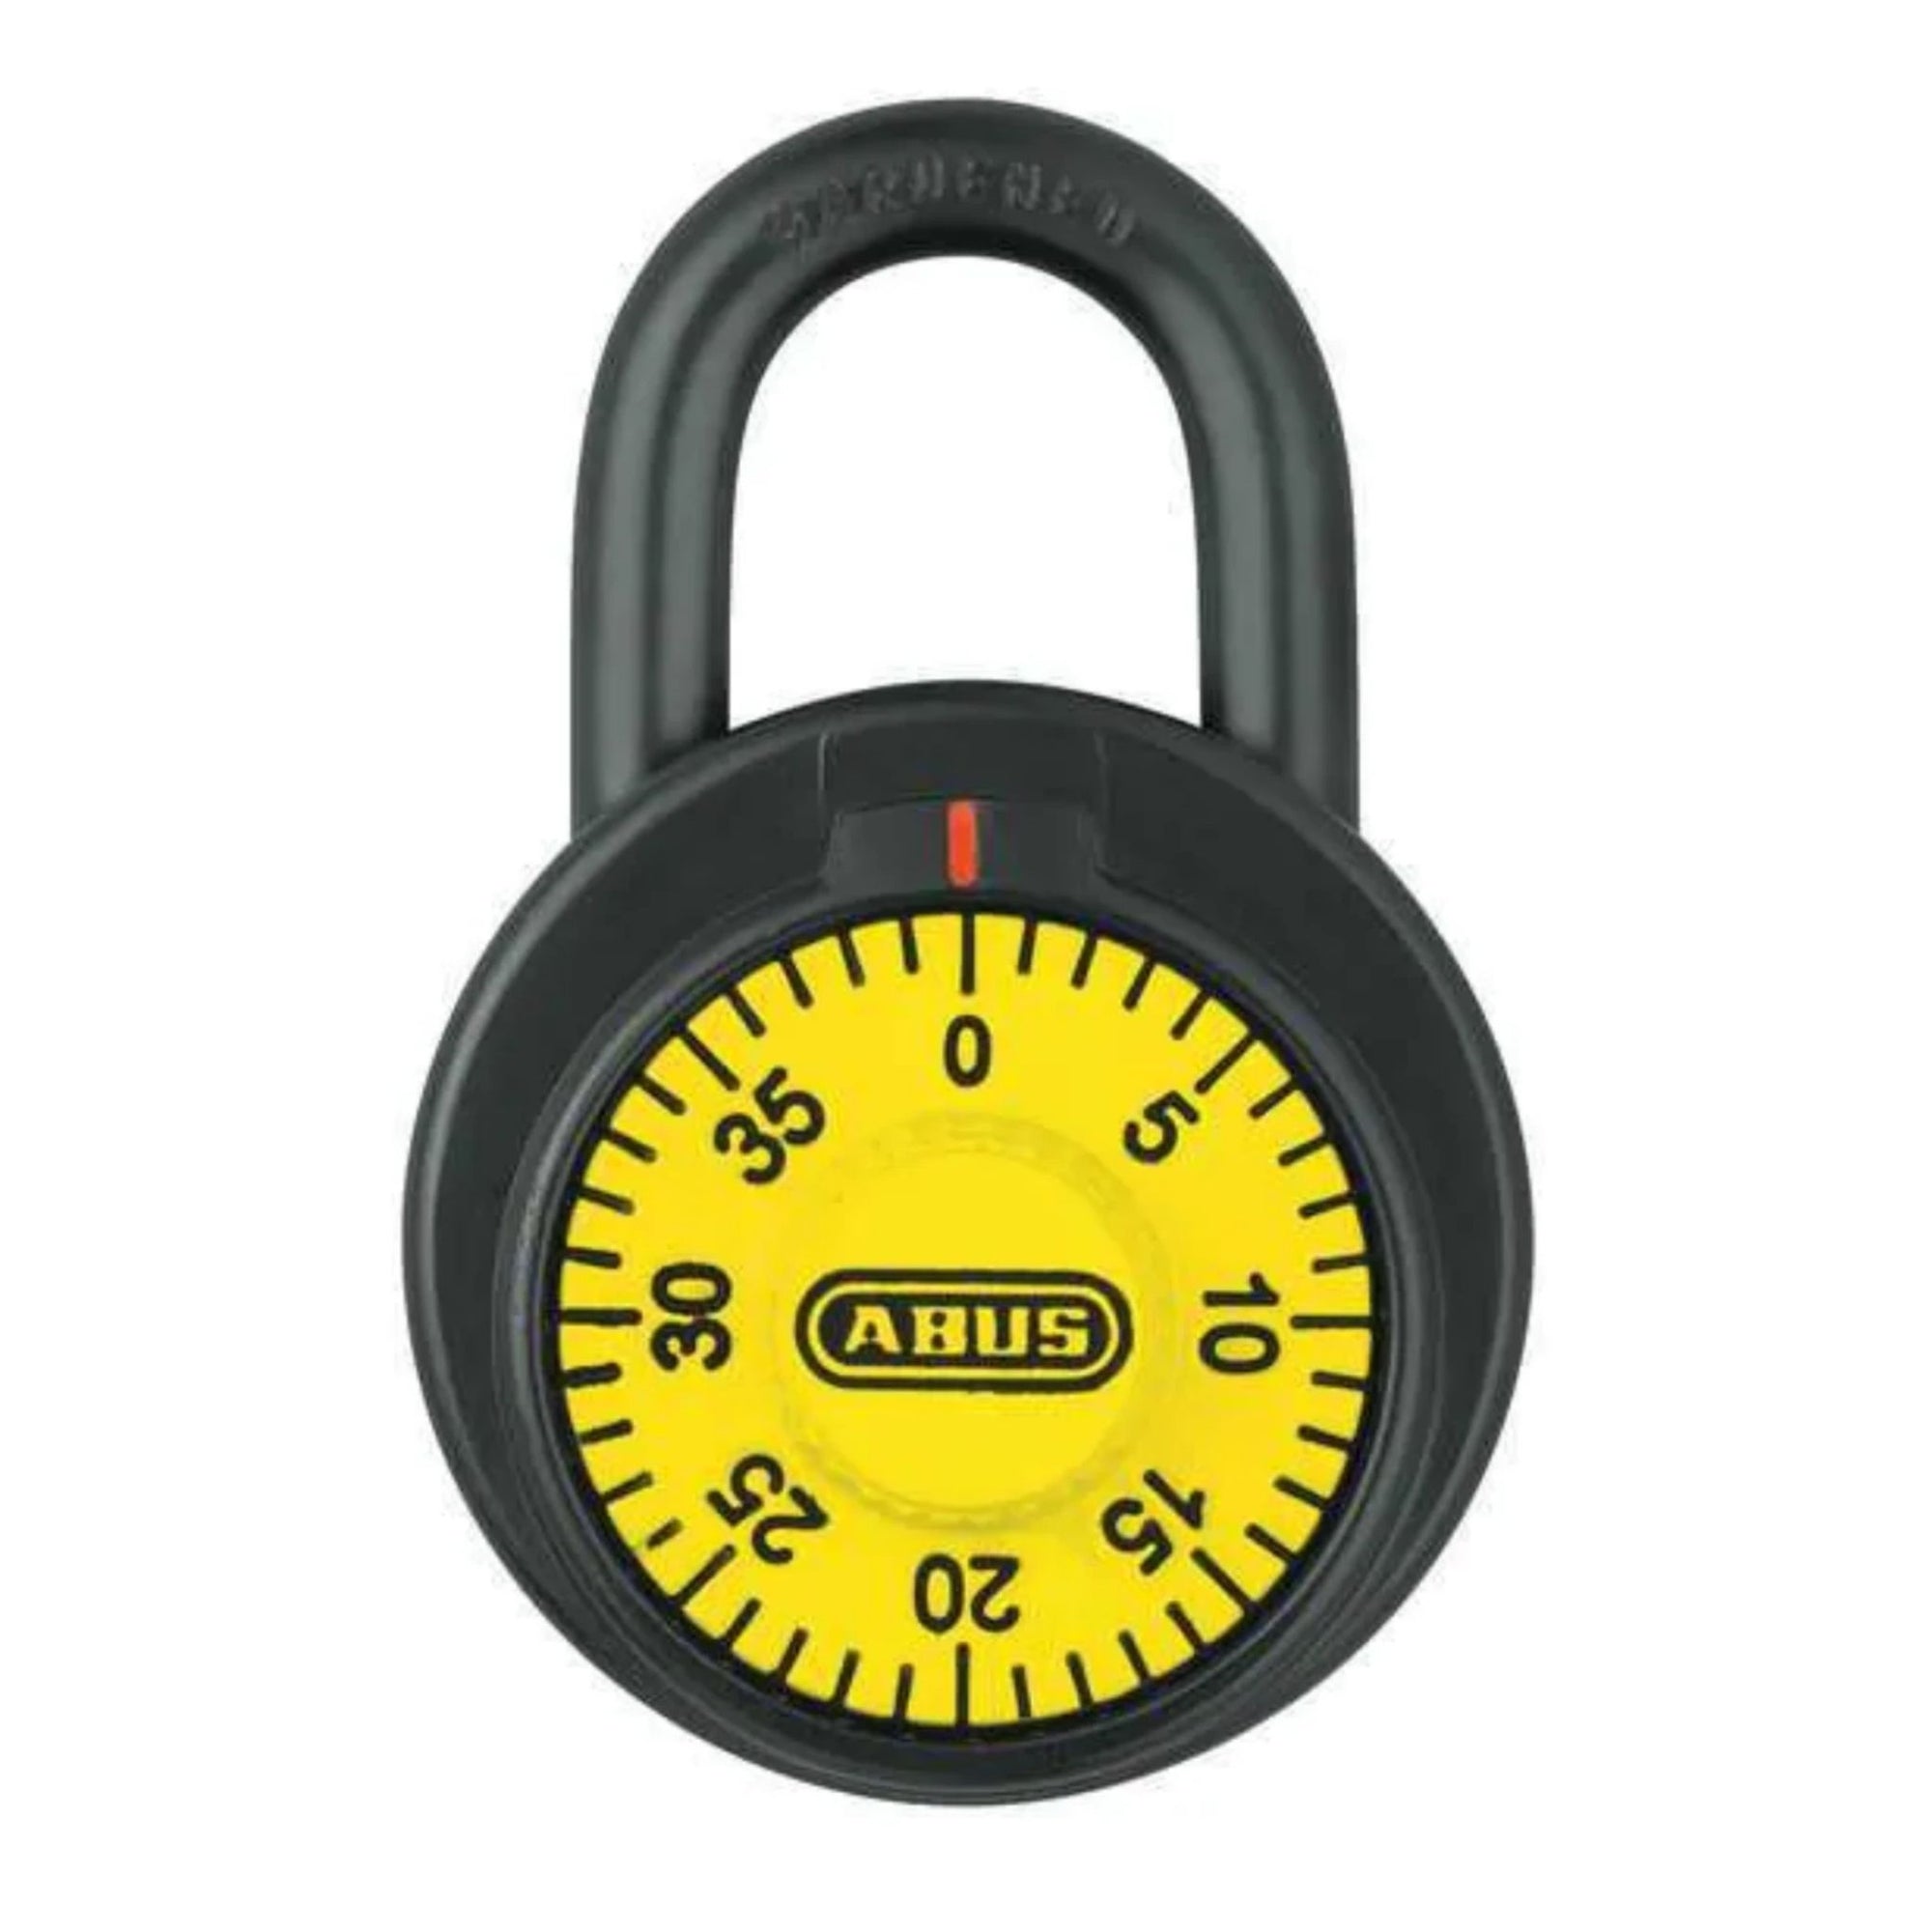 Abus 78/50 KC KA 507A Yellow Locker Padlock with Key Control Matched to Key Number KA507A - The Lock Source